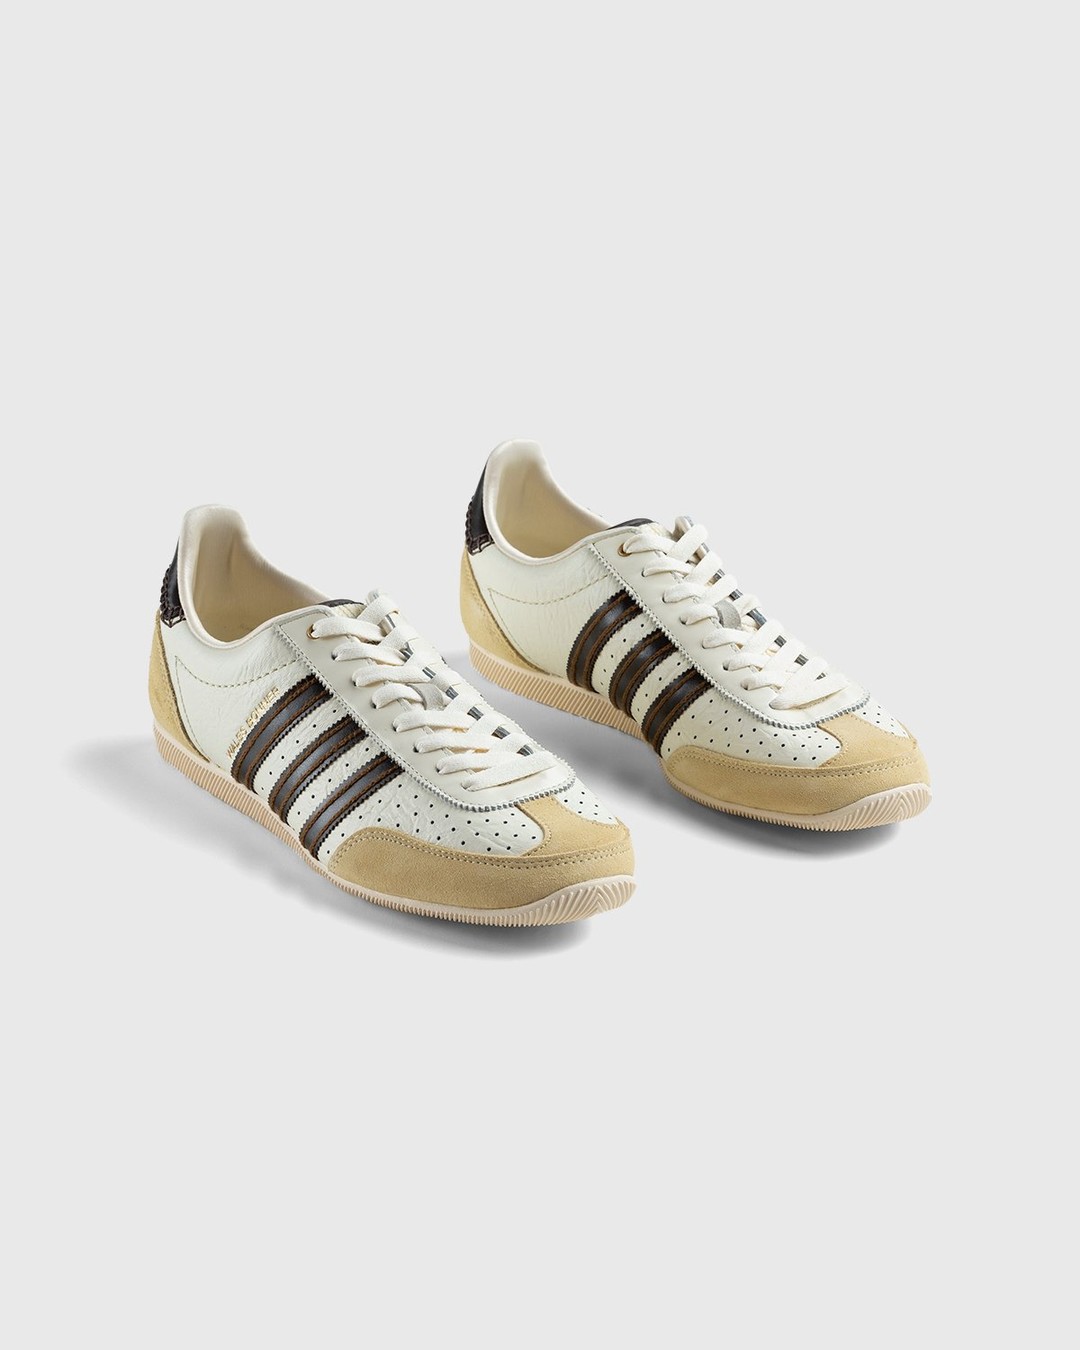 Adidas x Wales Bonner – Japan Cream White/Easy Yellow/Dark Brown - Low Top Sneakers - White - Image 3